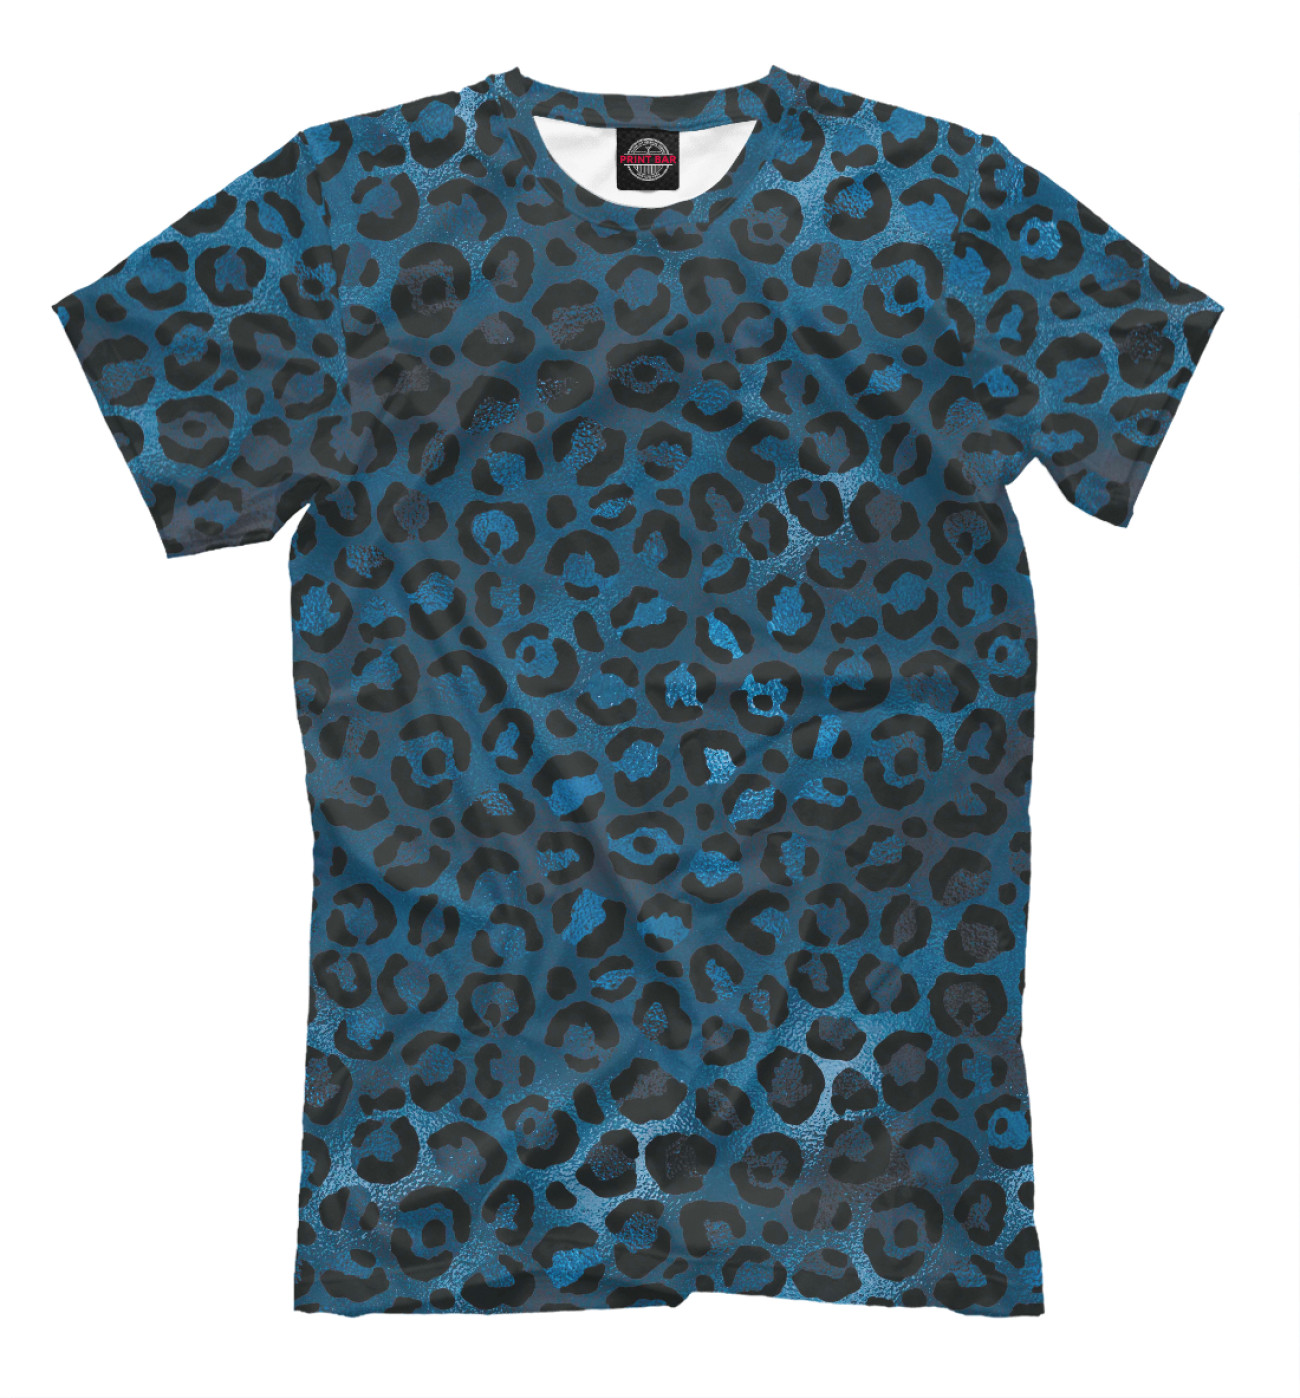 Мужская Футболка Синяя леопардовая текстура, артикул: ABS-419176-fut-2